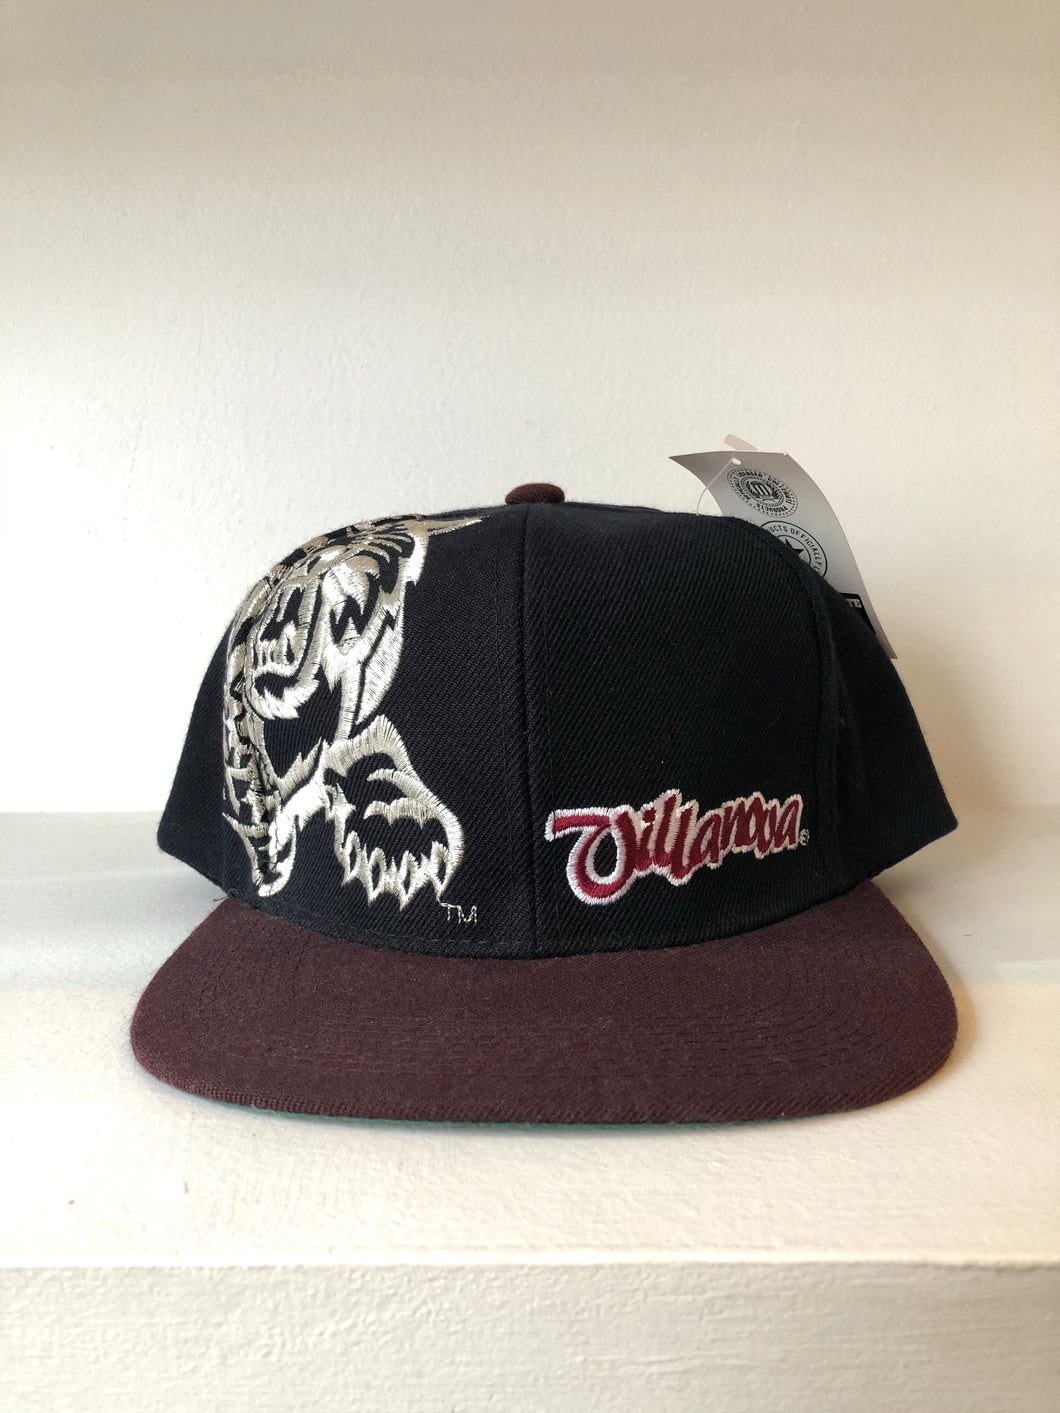 Villanova Brown/Black SnapBack Hat